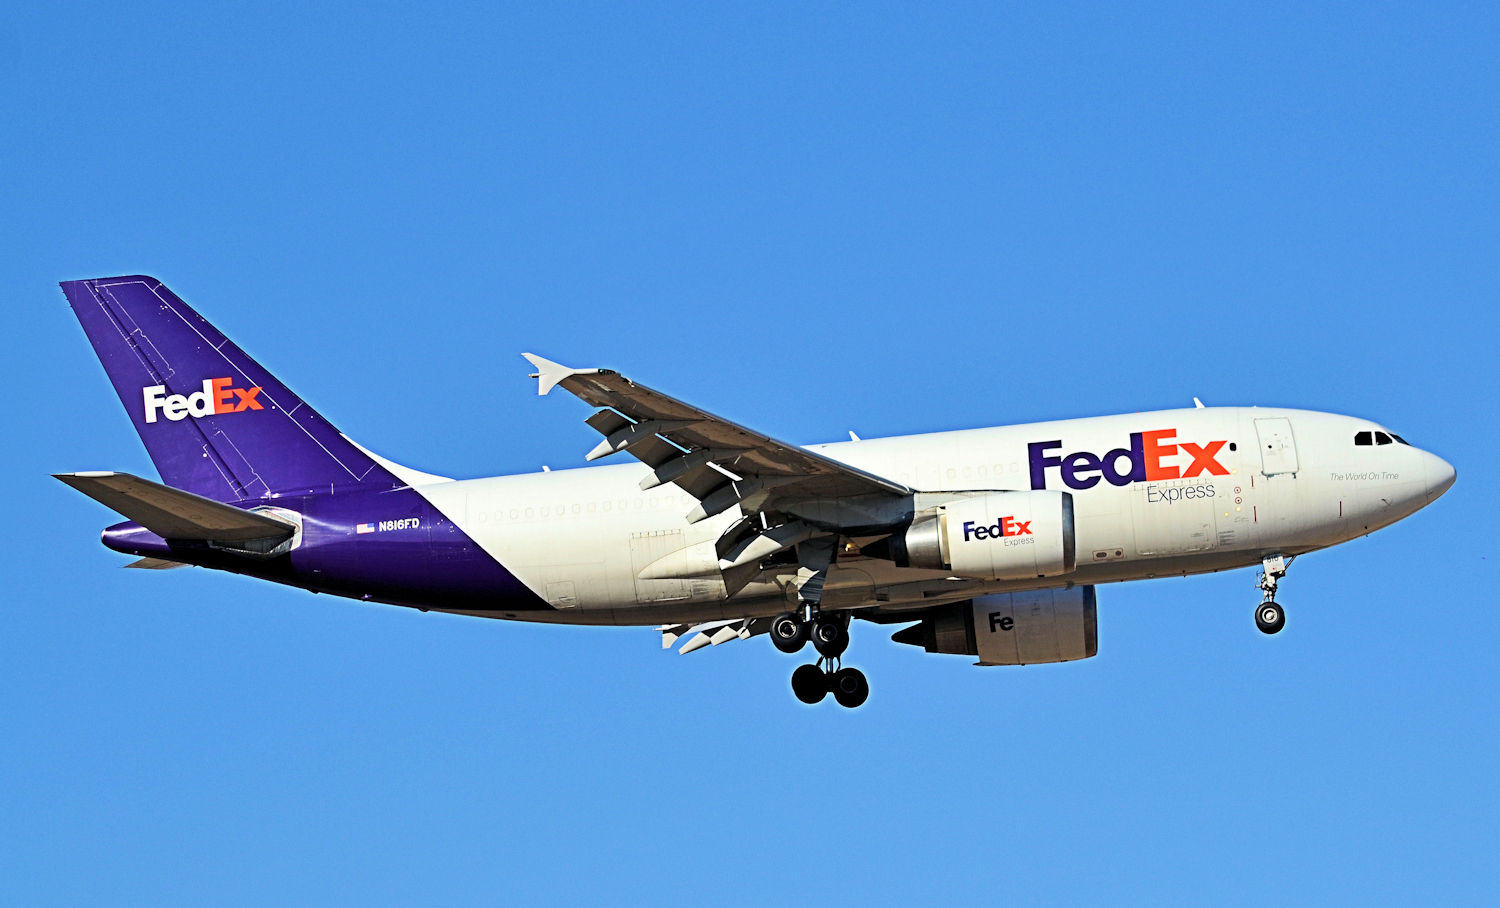 N816FD/N816FD Fedex - Federal Express Airbus A310 Airframe Information - AVSpotters.com